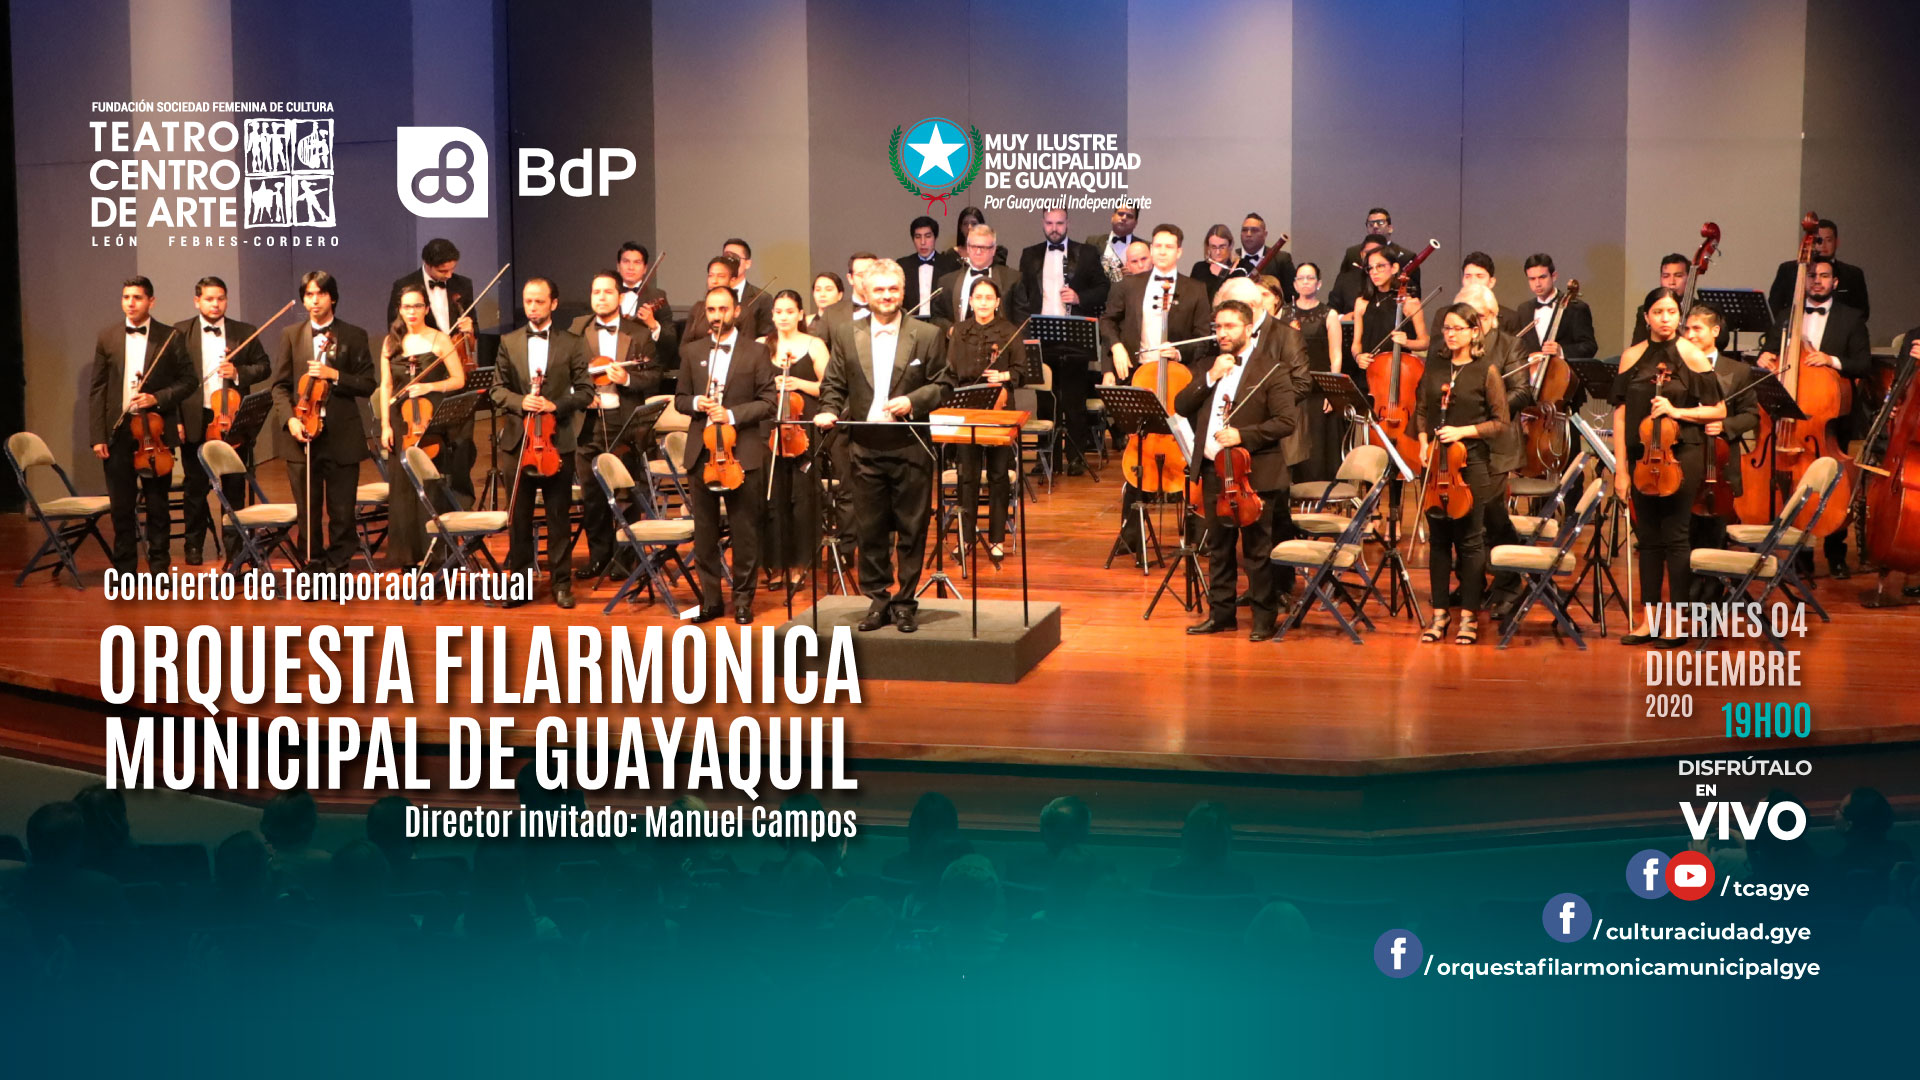 concierto-temporada-orquesta-filarmonica-municipal-guayaquil